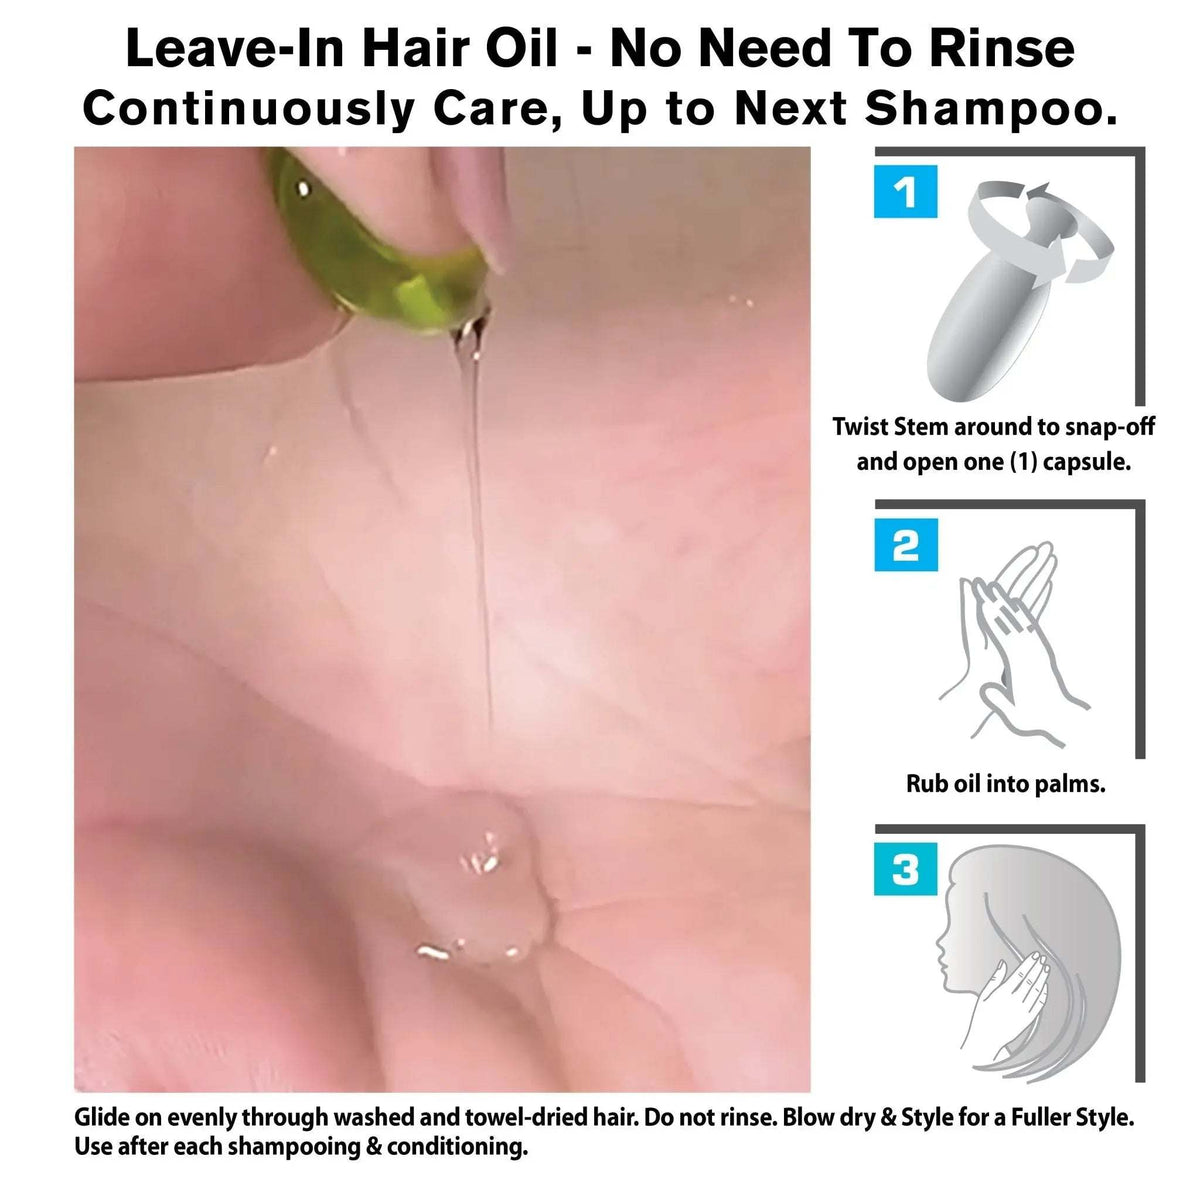 CURALIGN Intensive Leave-In Hair Oil with Argan Oil, Hyaluronic Acid, Ceramides, Peptides &amp; Vitamins - SNOBGIRLS Canada